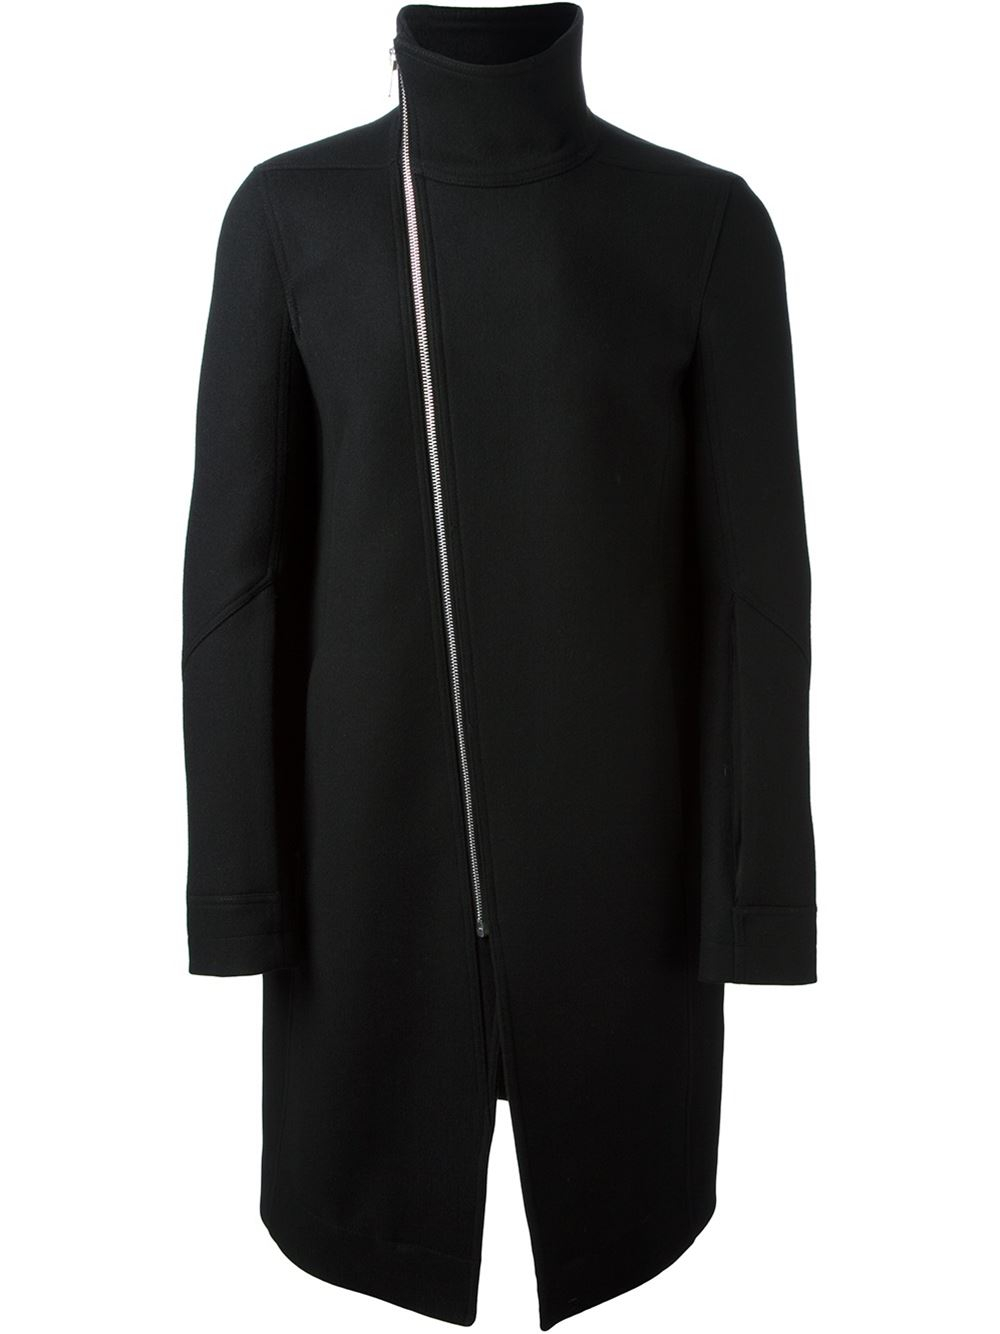 Lyst - Rick Owens Tubeway Coat in Black for Men